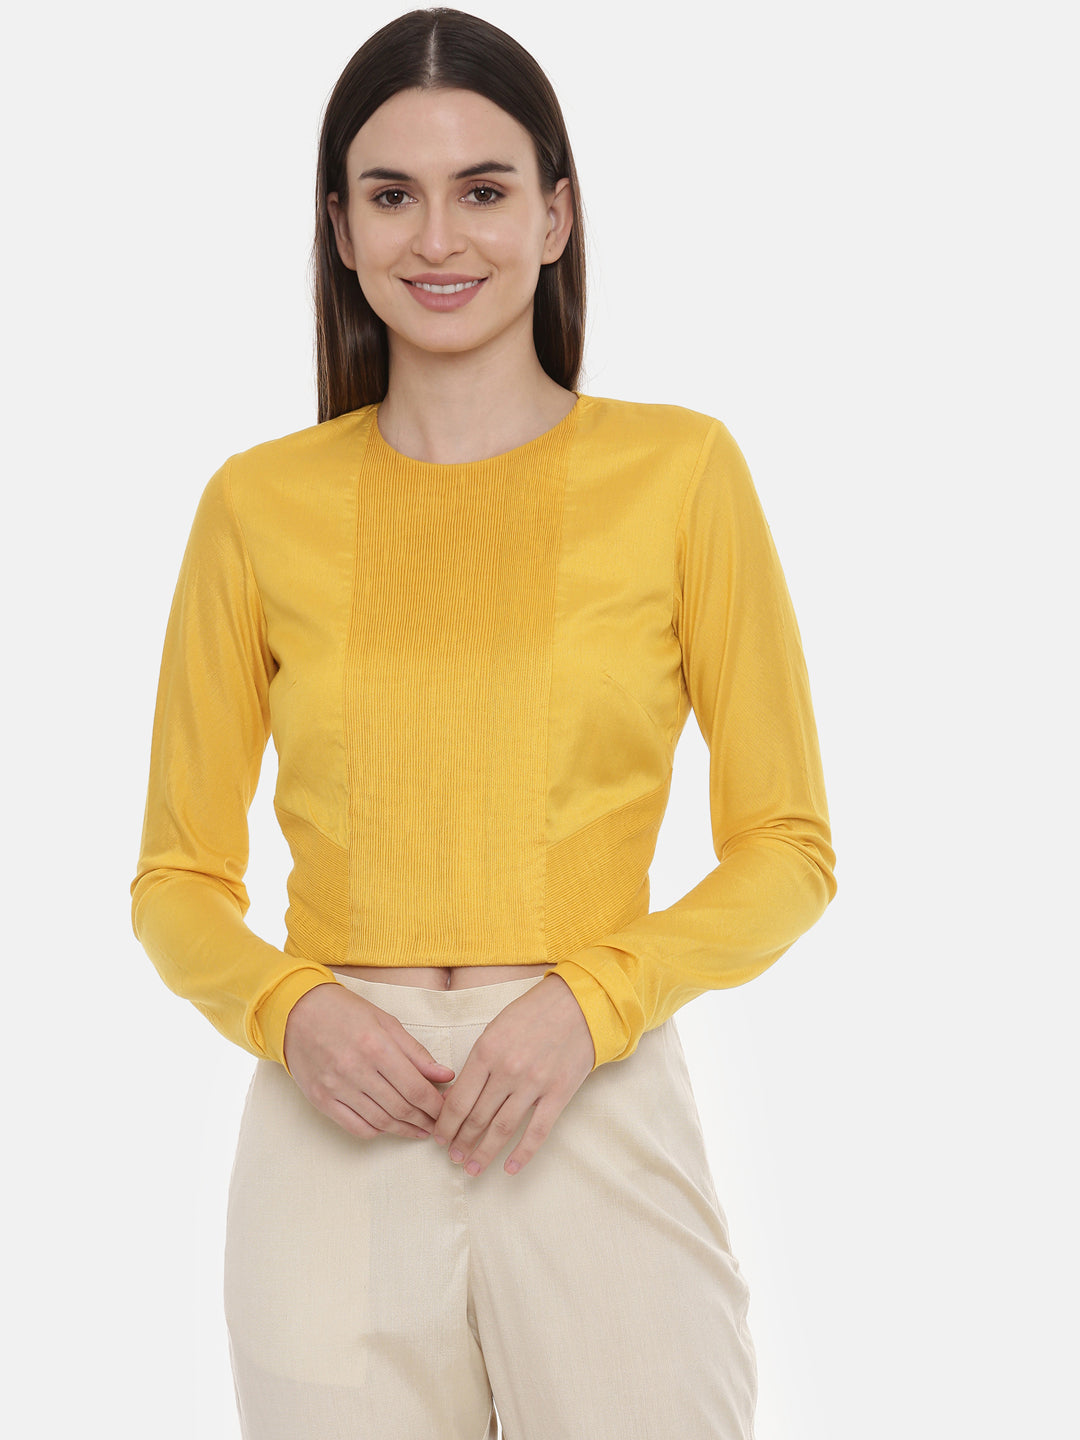 Pintuck Yellow Silk Blouse  - ASBL050